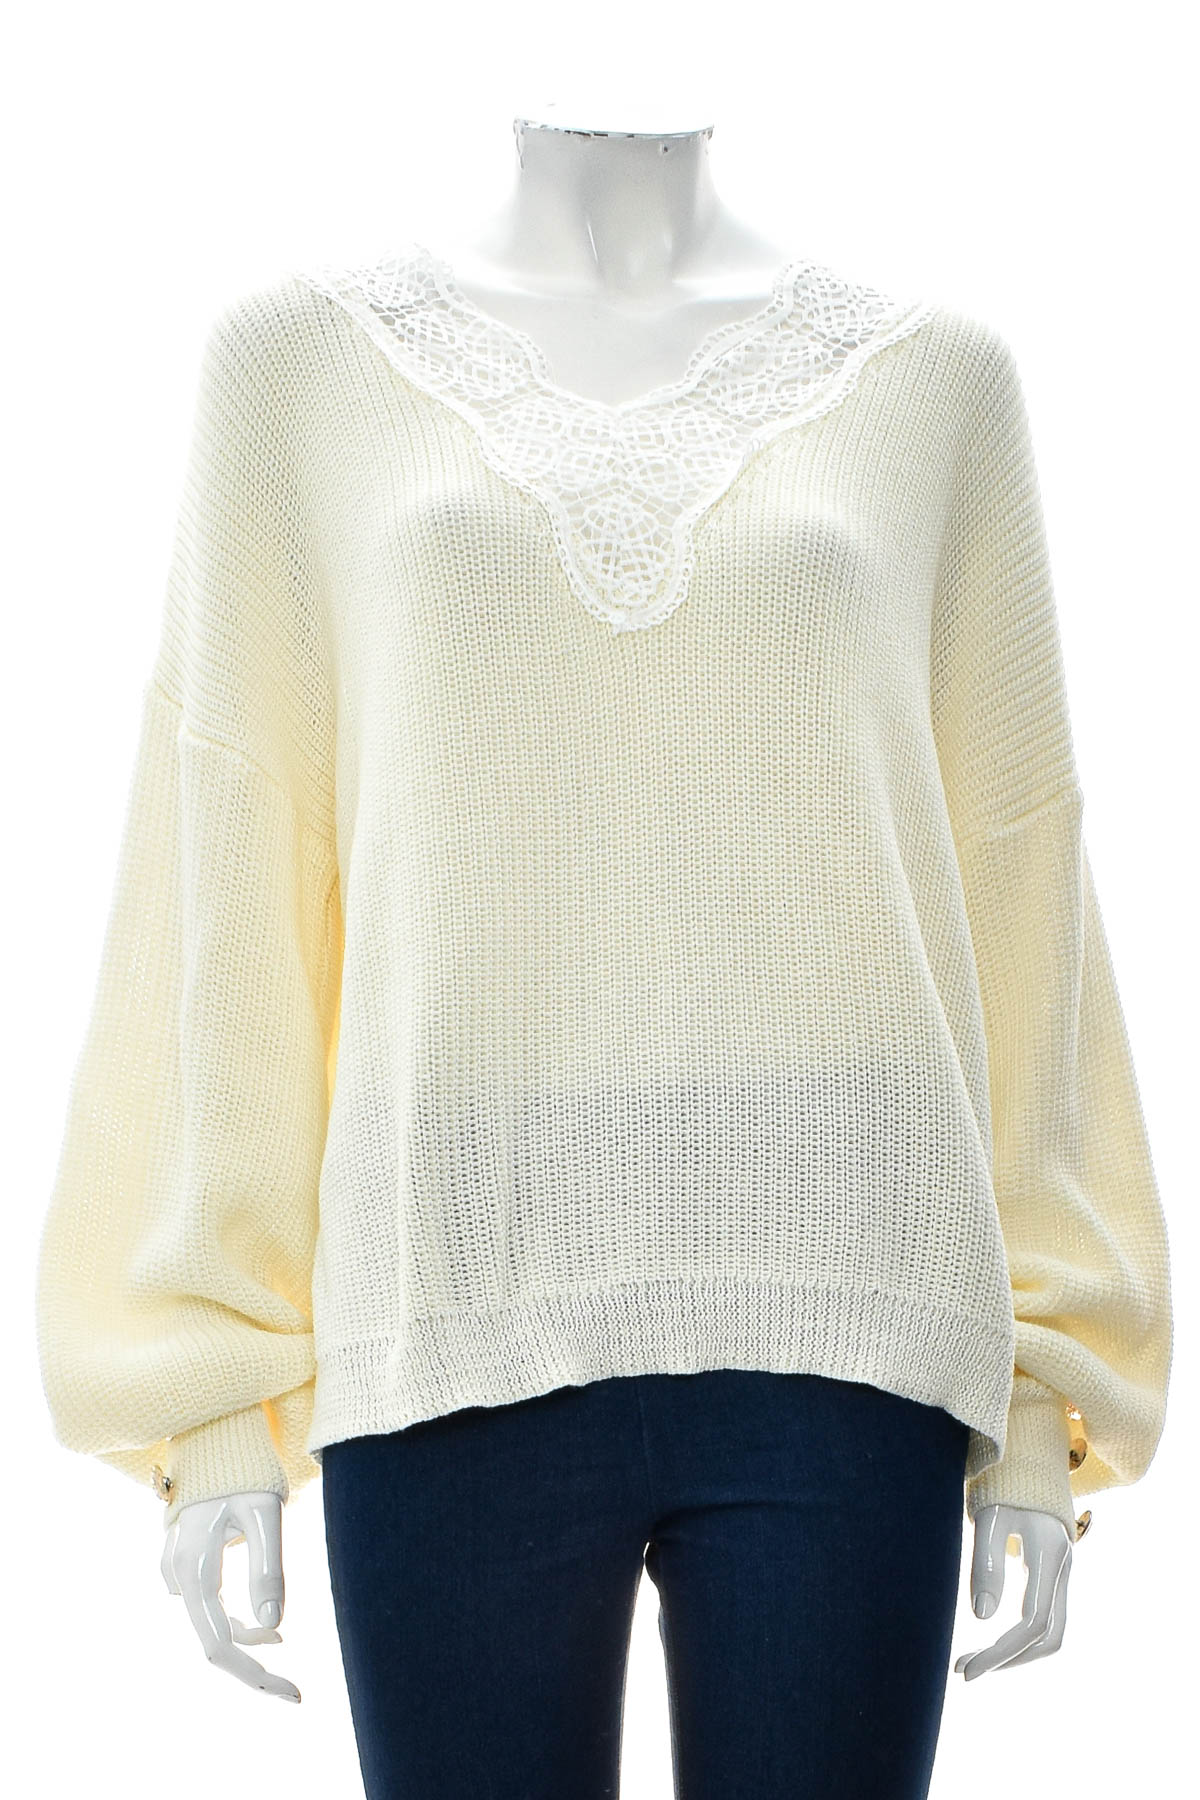 Women's sweater - OCOrderPlus - 0